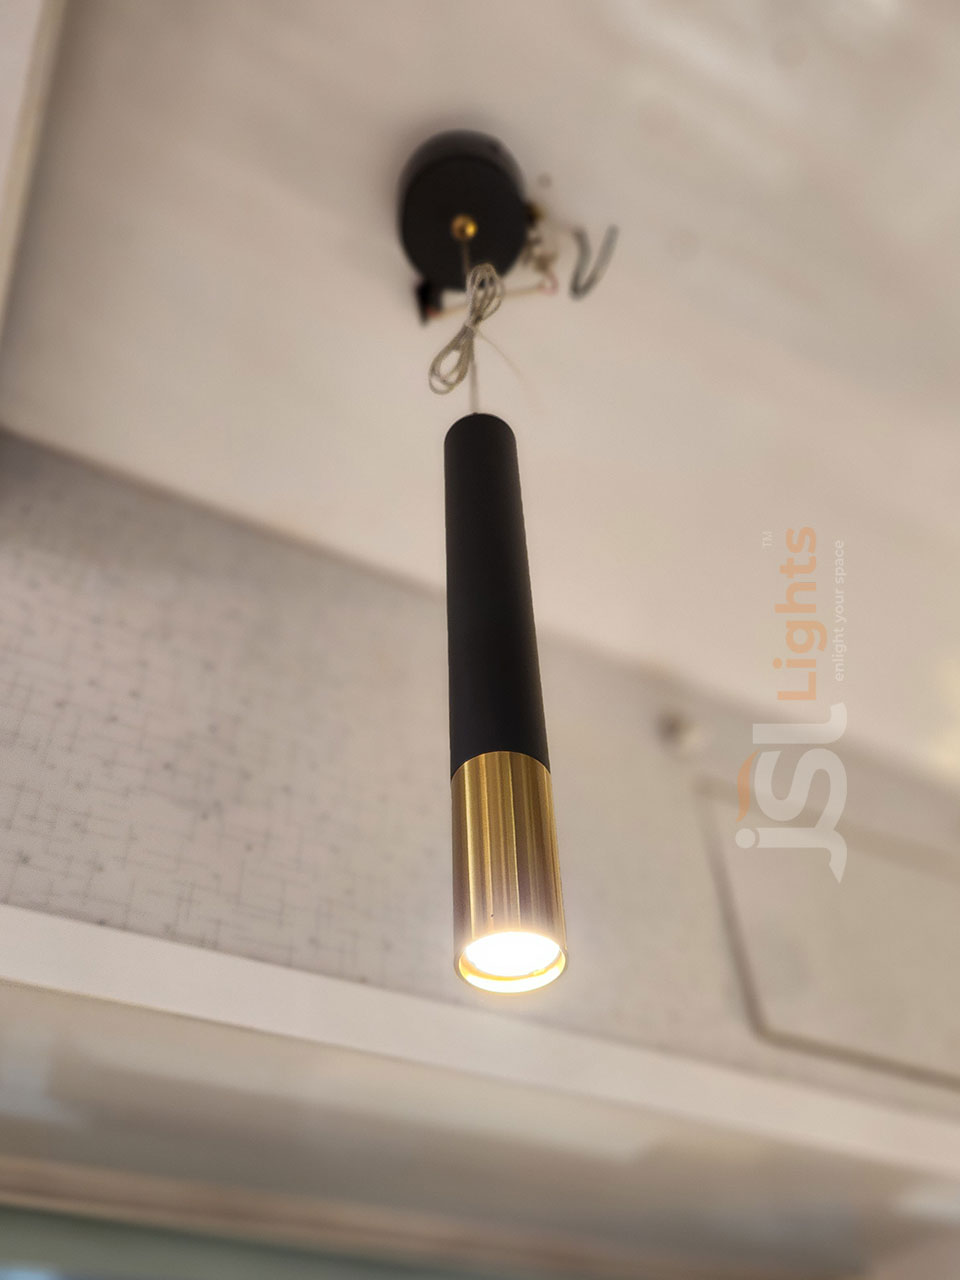 12W LX 382 Black Antique Fancy Hanging Lights for Home Ceiling Pendant Light with 3000K LED Color ON